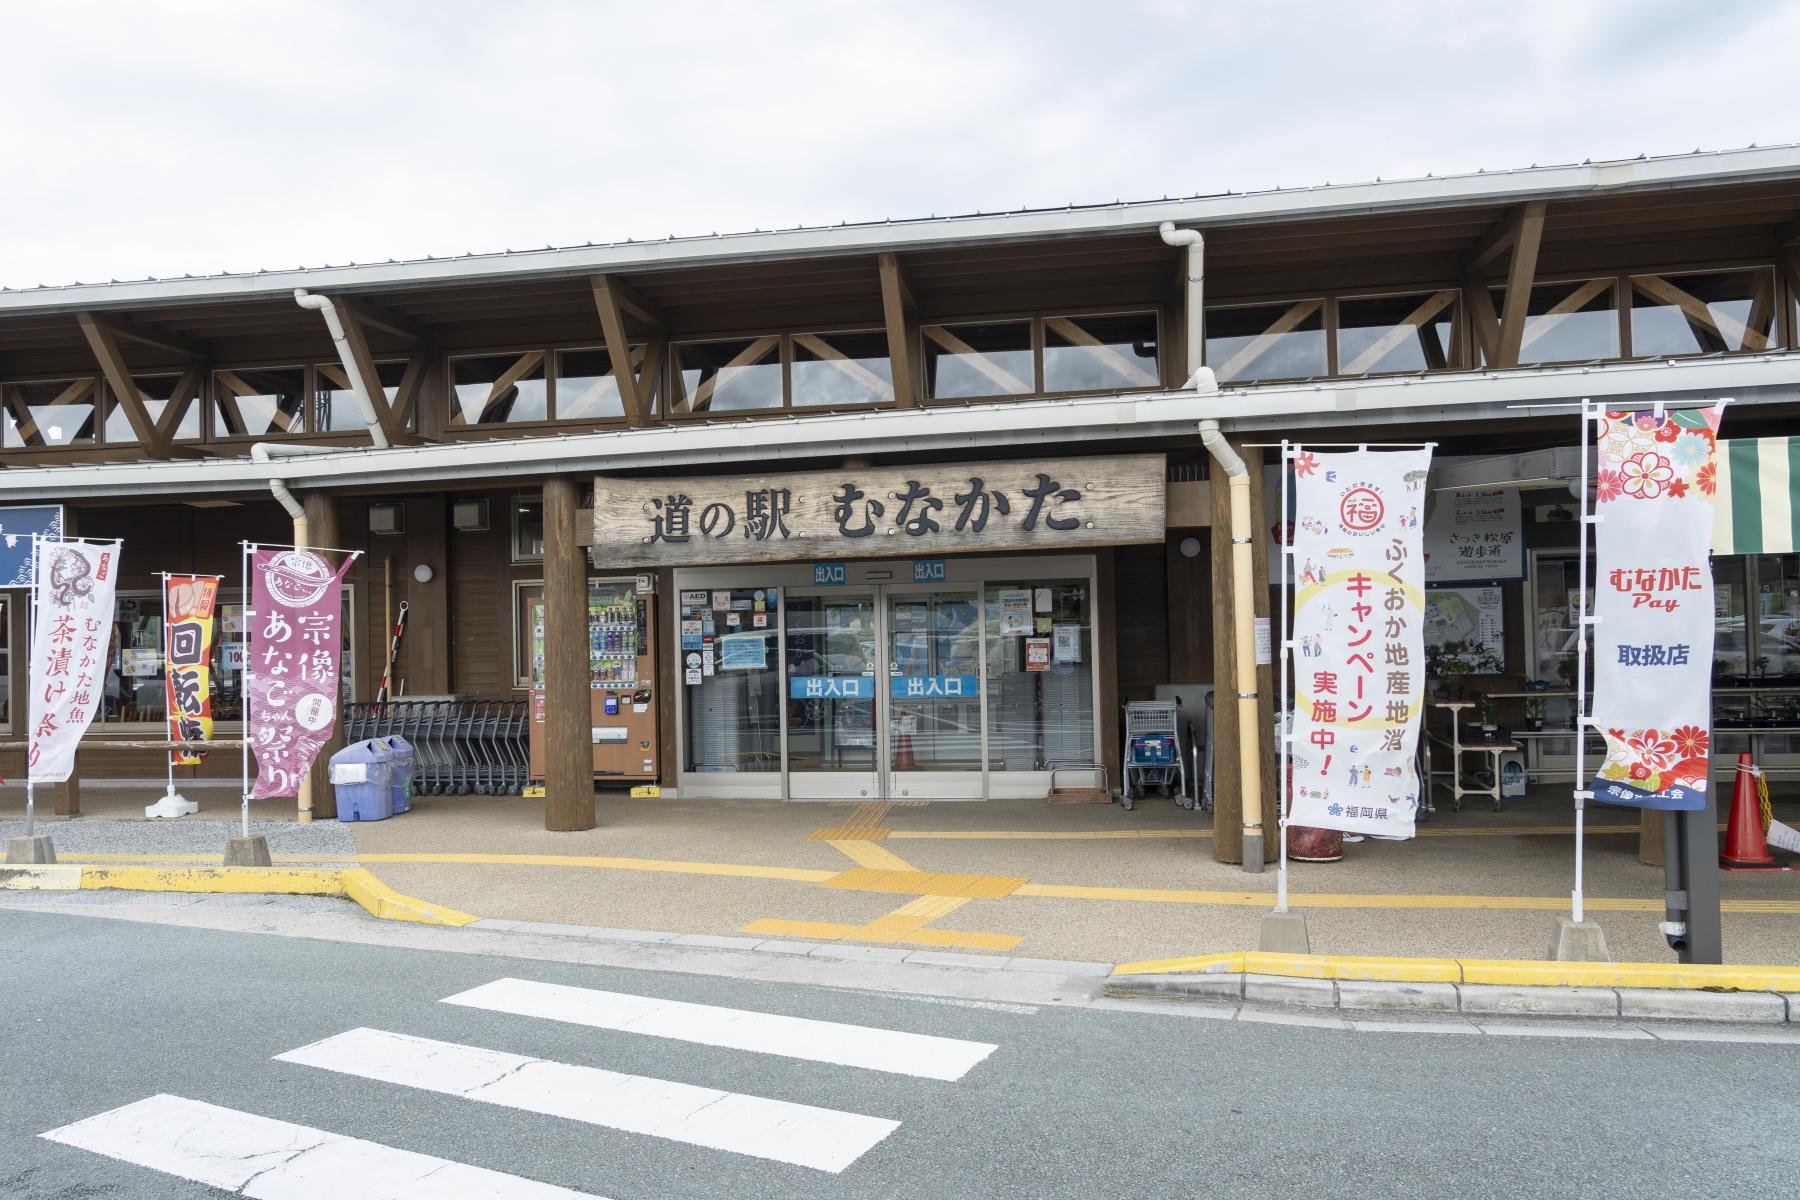 Michi no Eki “Munakata” Roadside Station